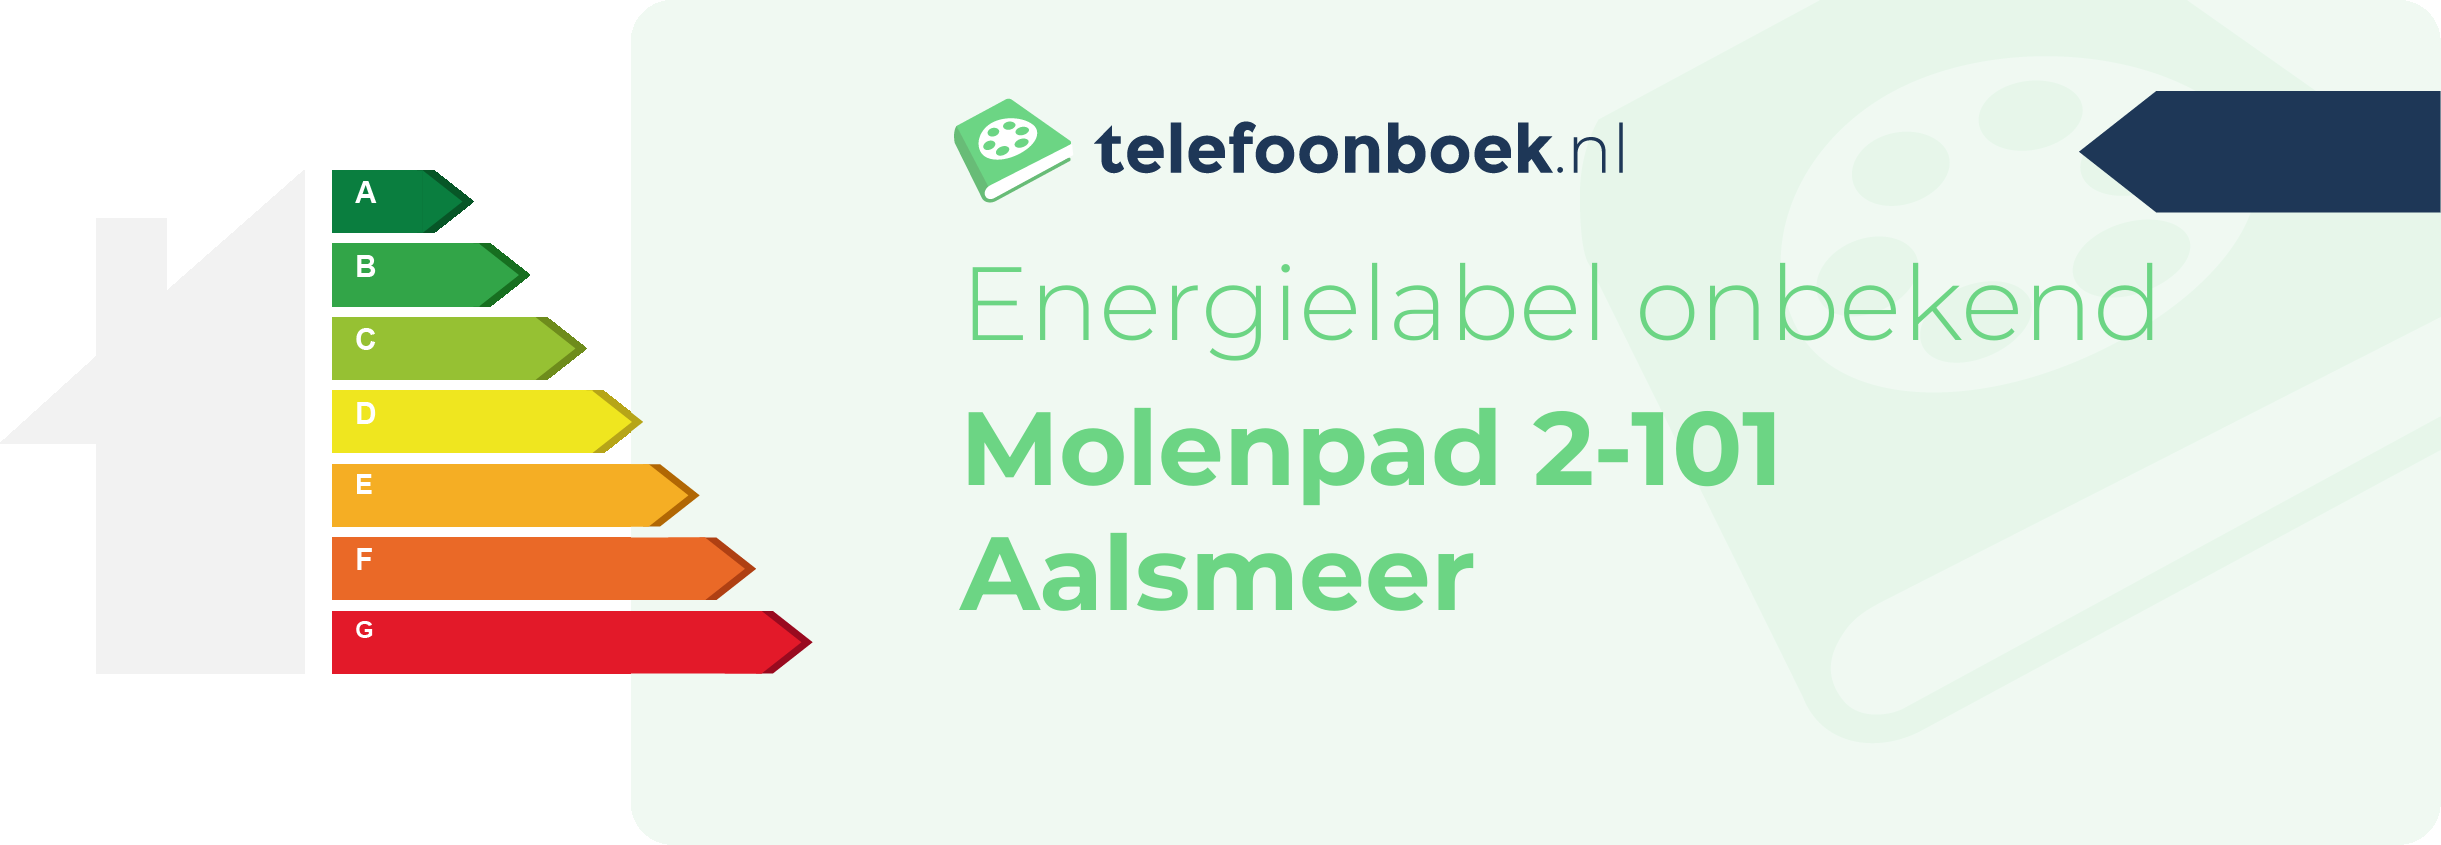 Energielabel Molenpad 2-101 Aalsmeer